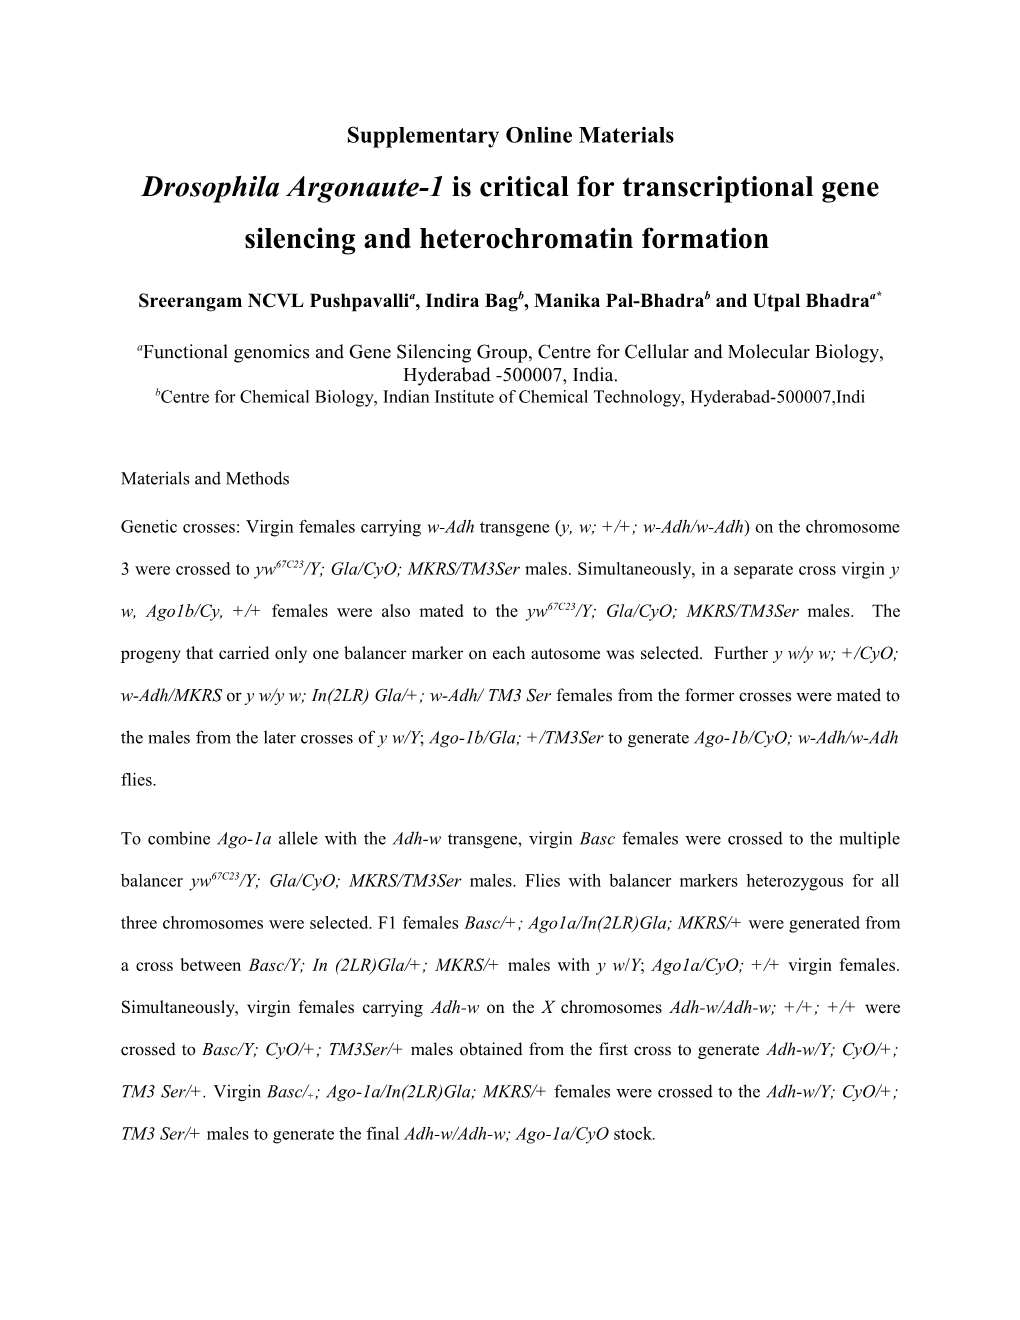 Drosophilaargonaute-1 Is Critical for Transcriptional Gene Silencing and Heterochromatin